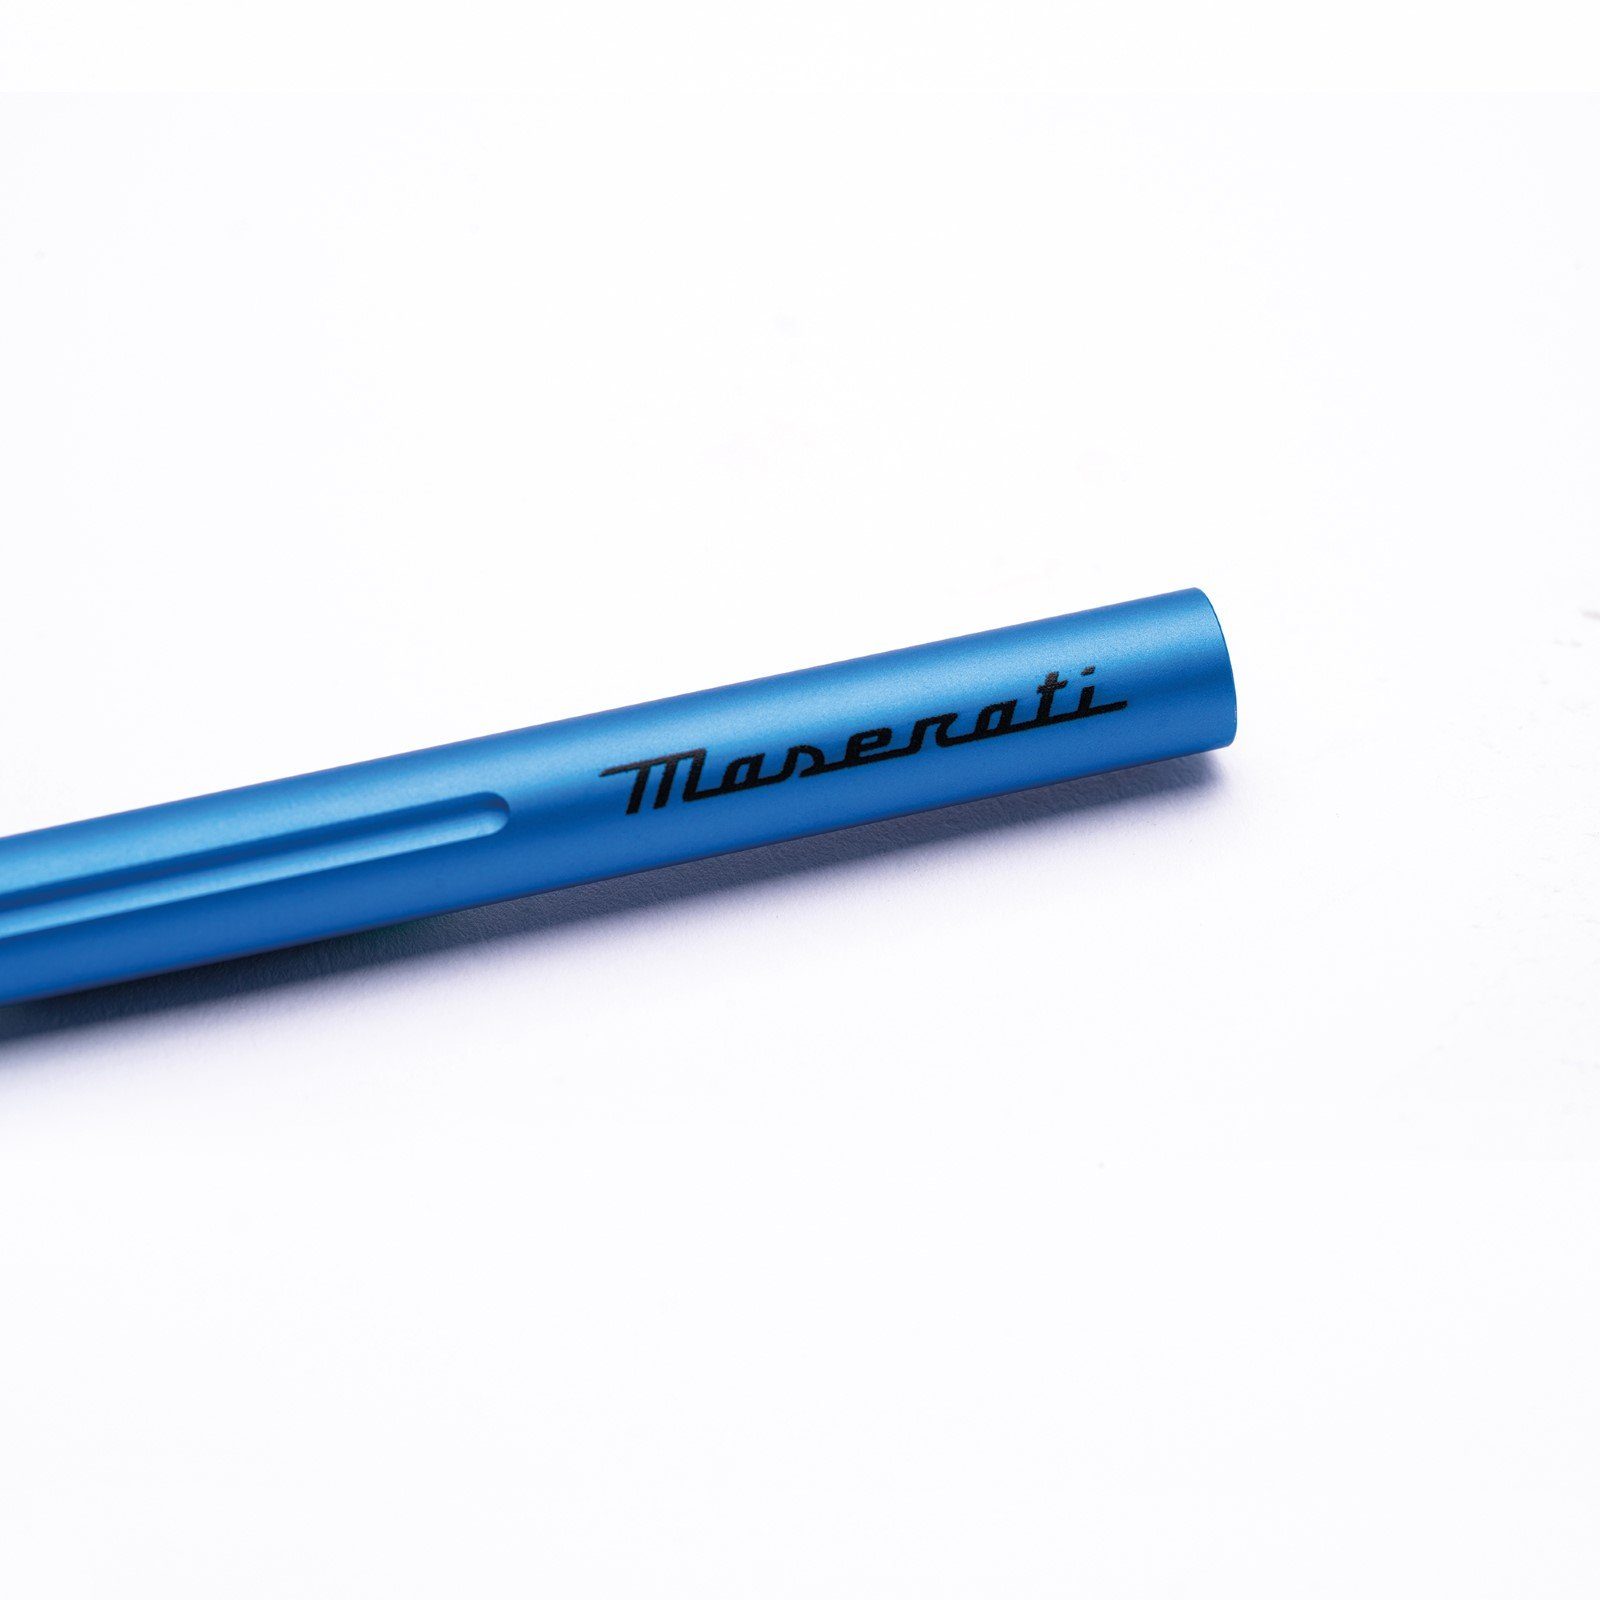 Pininfarina Bleistift Maserati Bleistift (kein Schreibgerä, Bleier Pininfarina Smart Set) Blau Pencil Grafeex